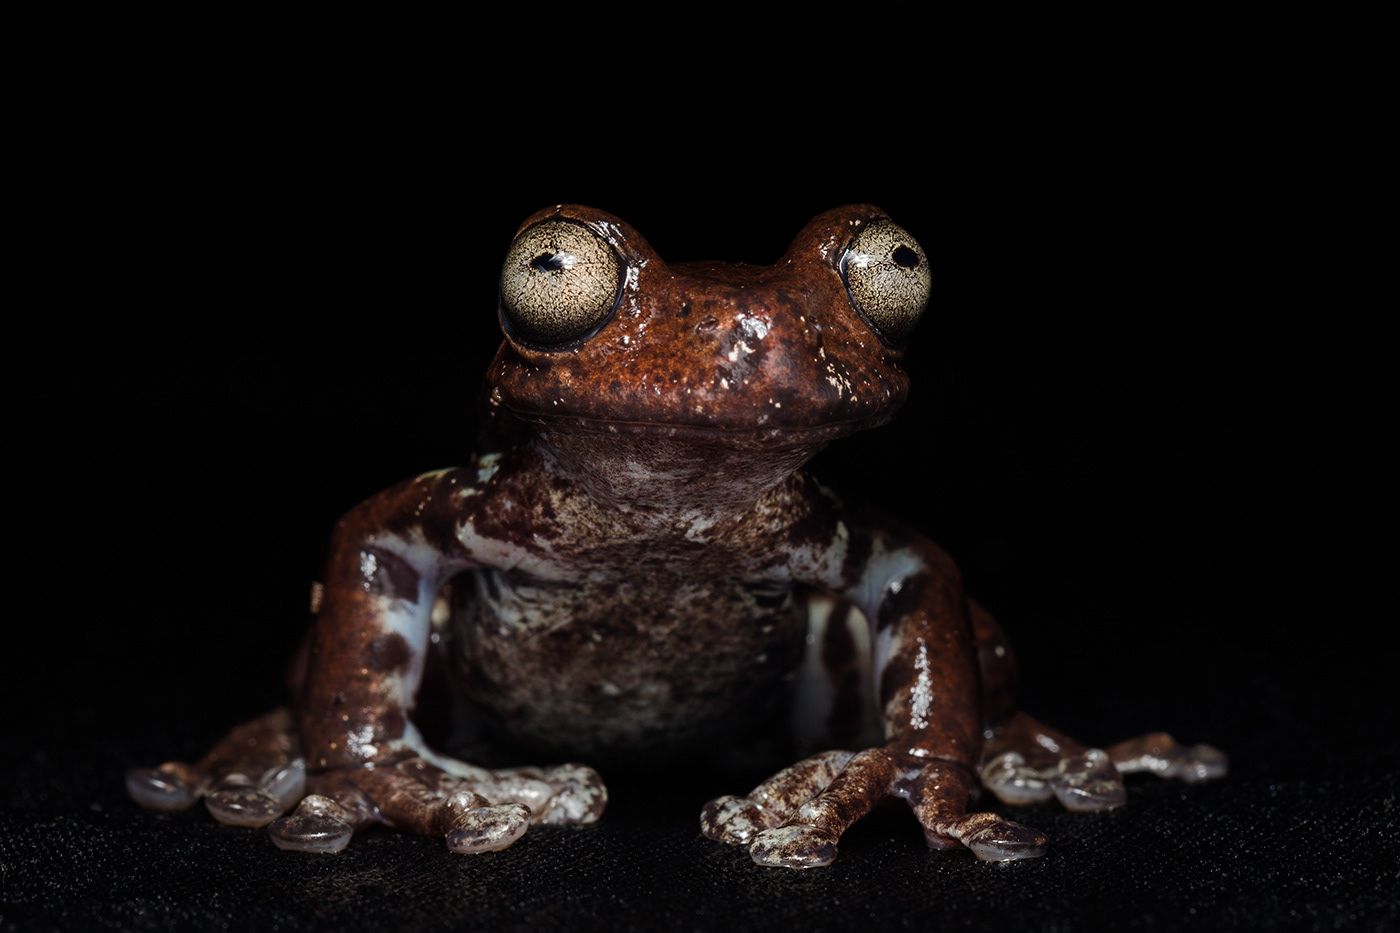 frog animals Nature Amphibian conservation environment portrait species endangered